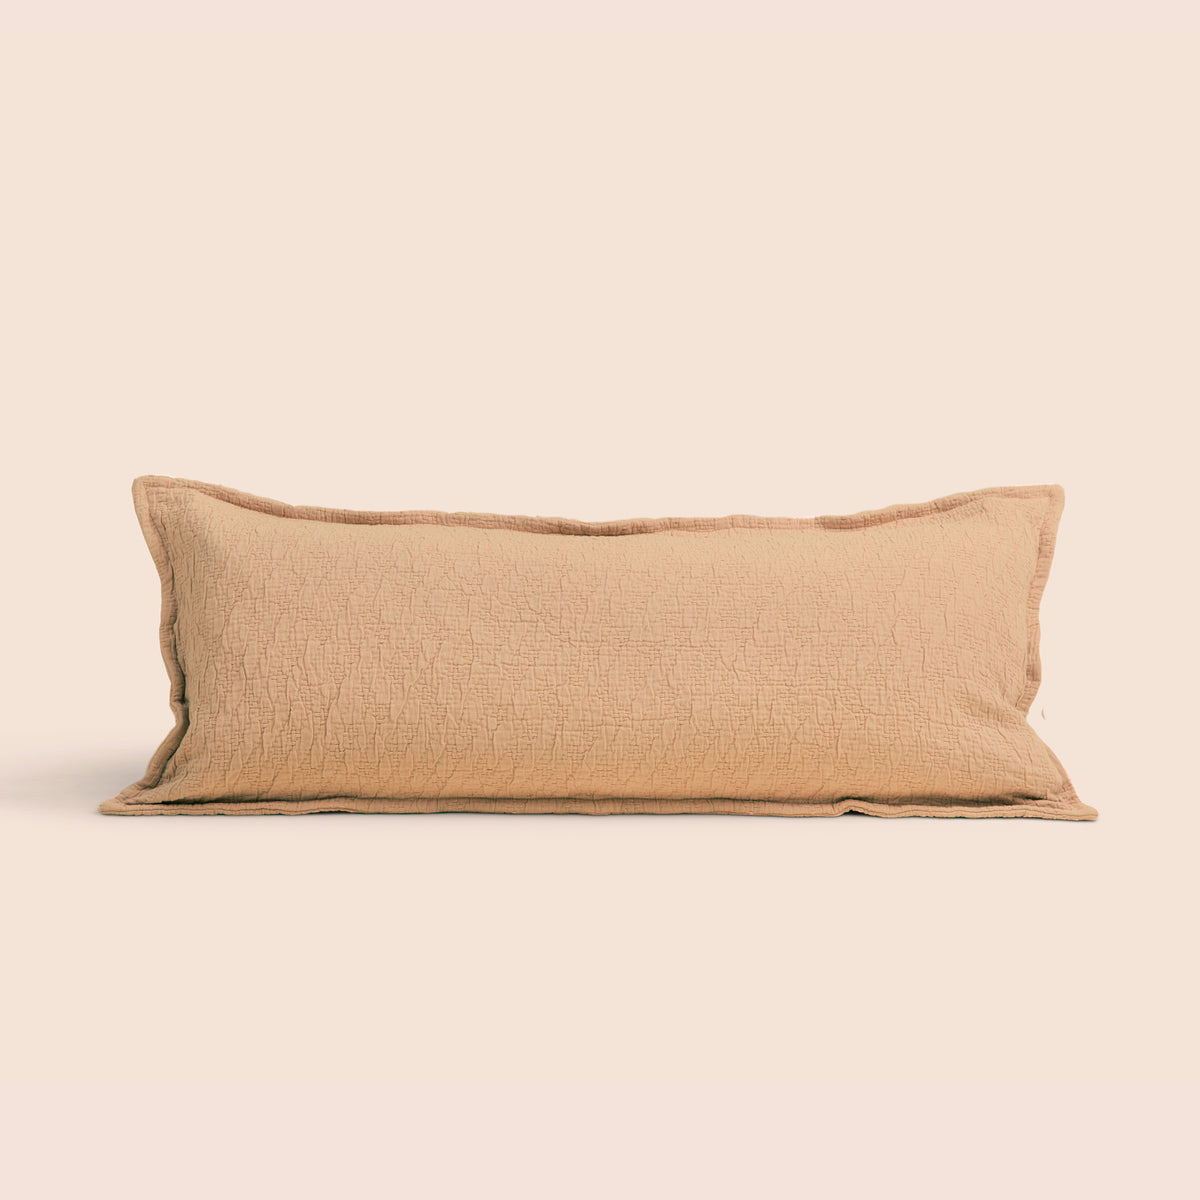 Image of an Ochre Wave Lumbar Pillow Cover on a lumbar pillow with a light pink background